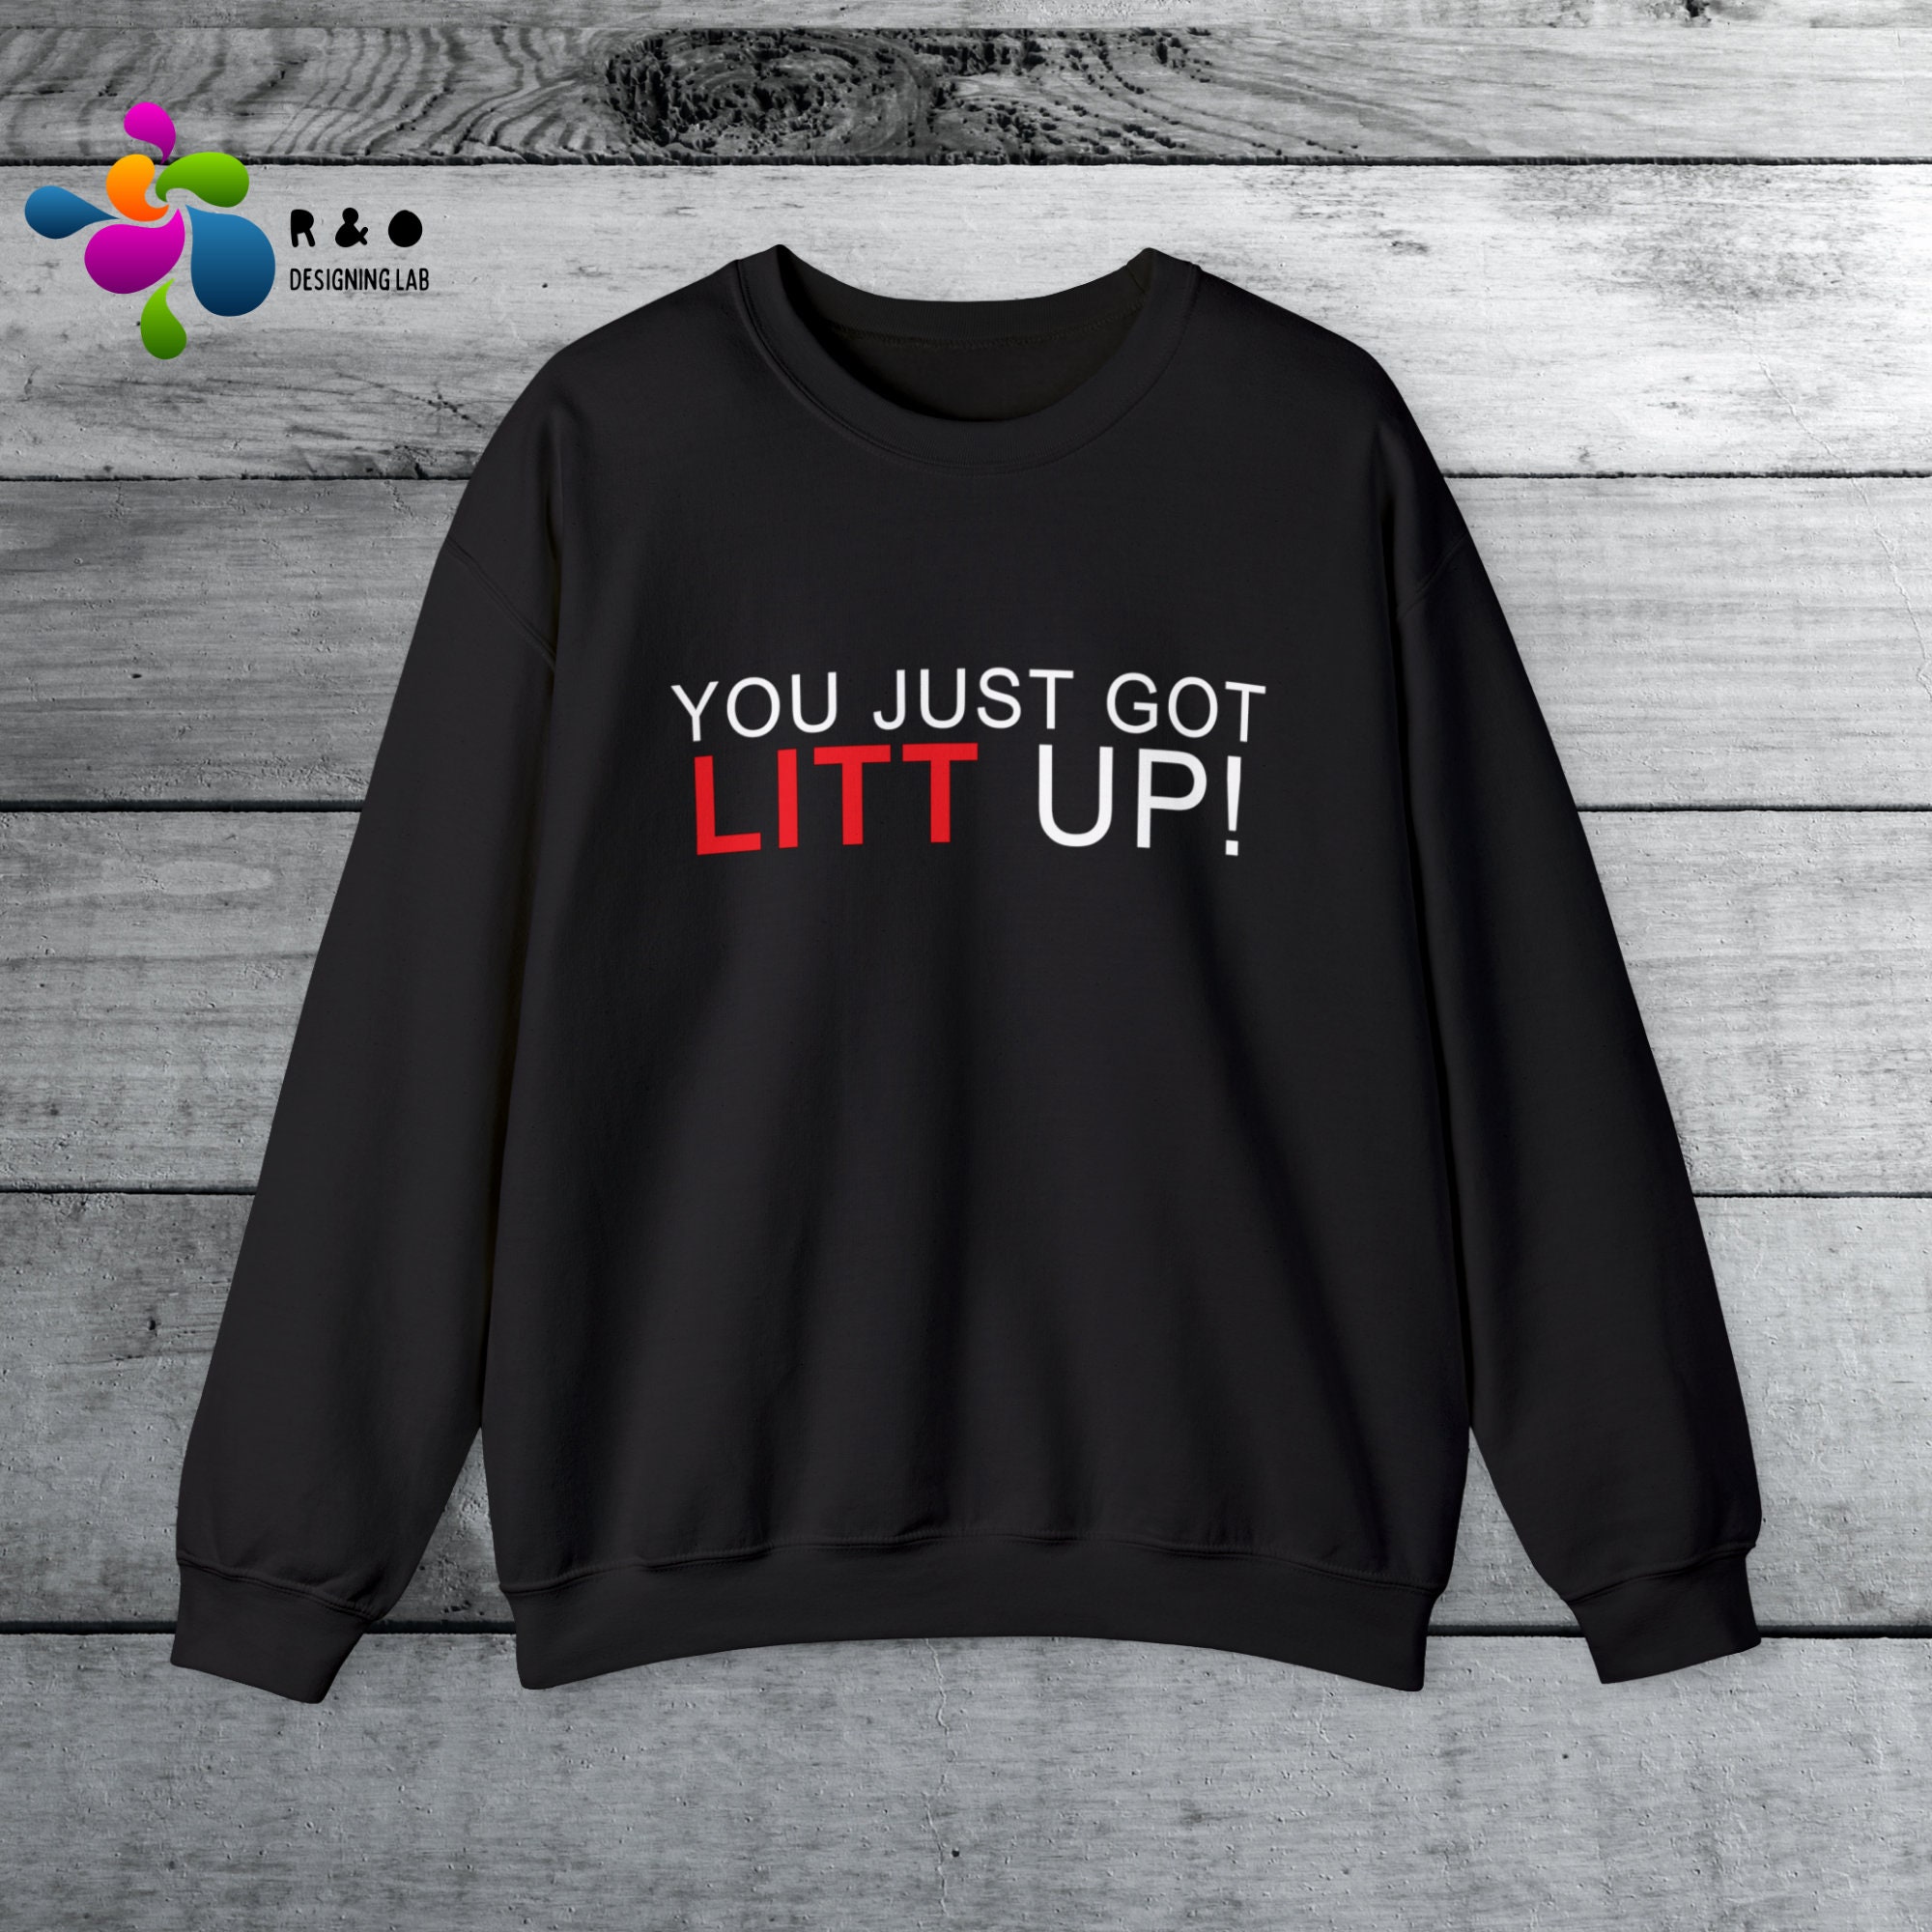 Louis Litt Homage Jumper Sweatshirt Funny Suits TV show Icon Legend 90's  Fandom